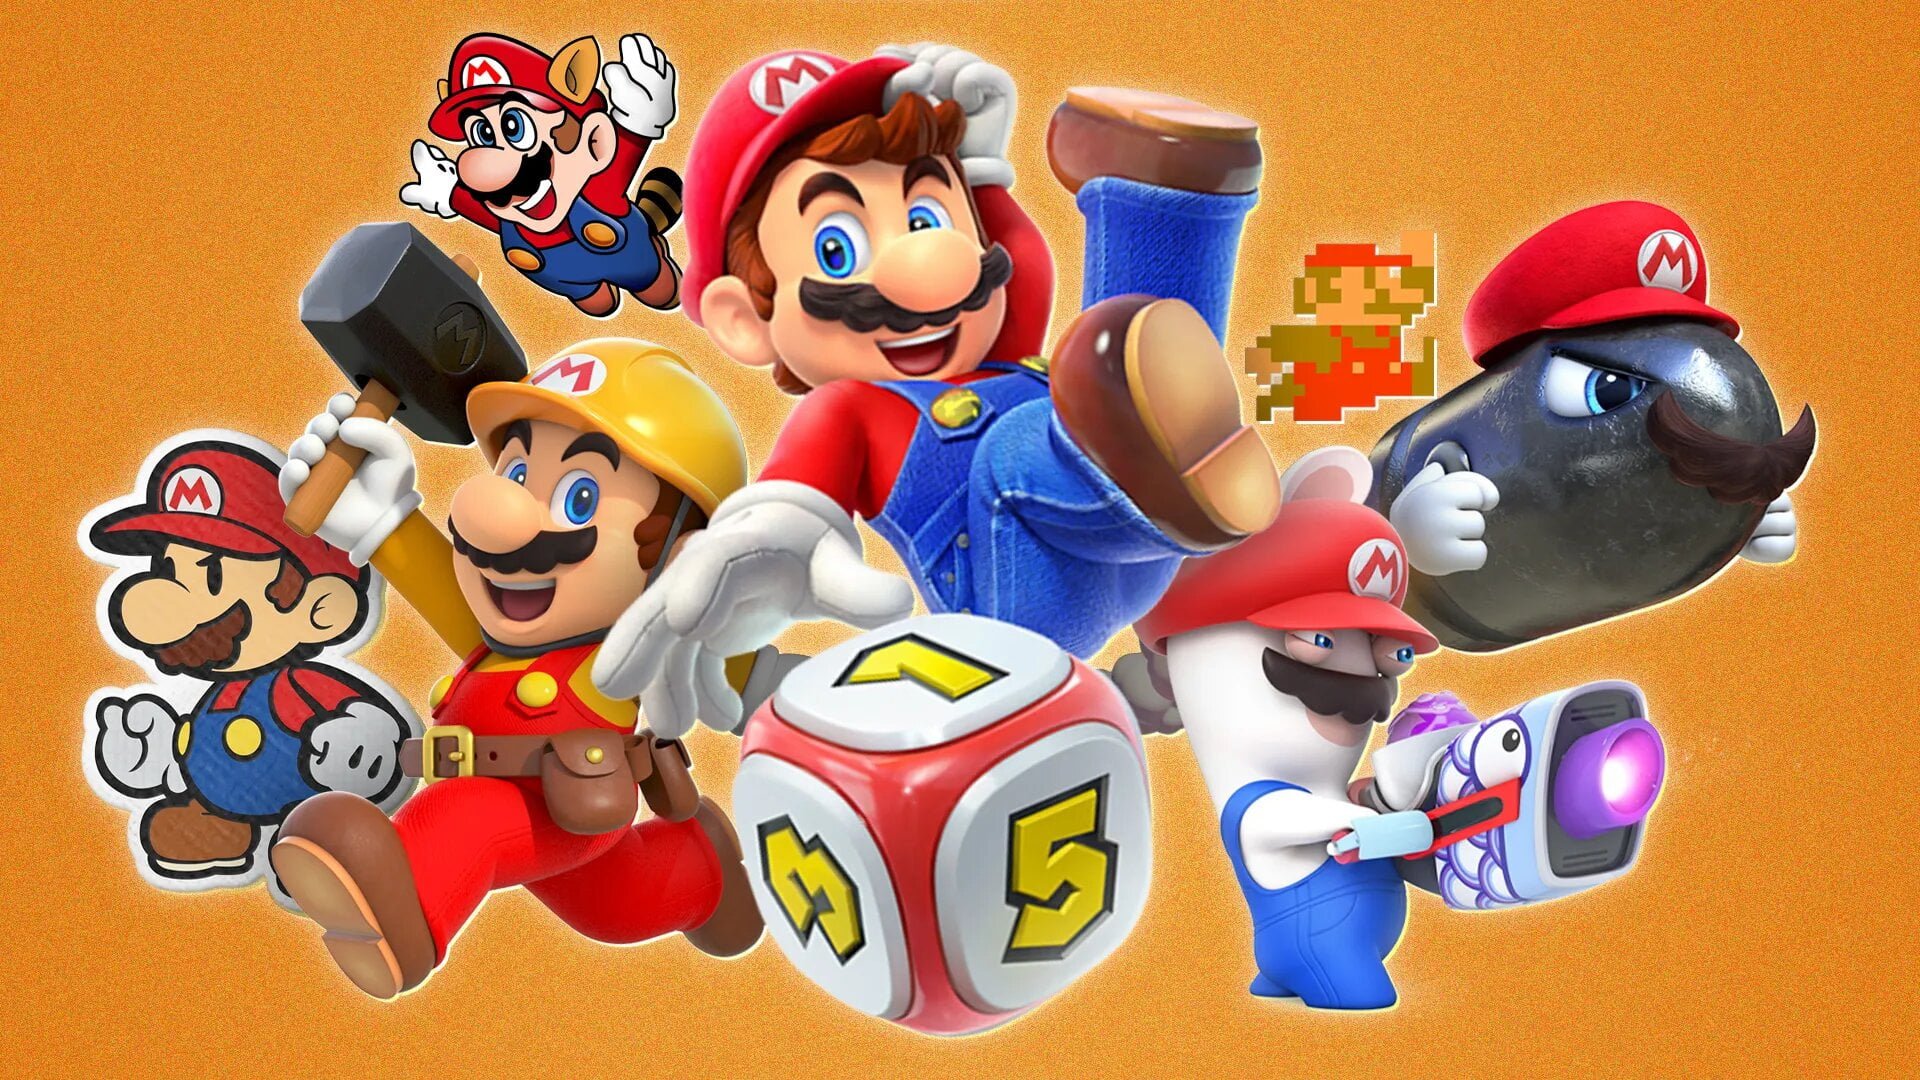 All Mario's gameplay